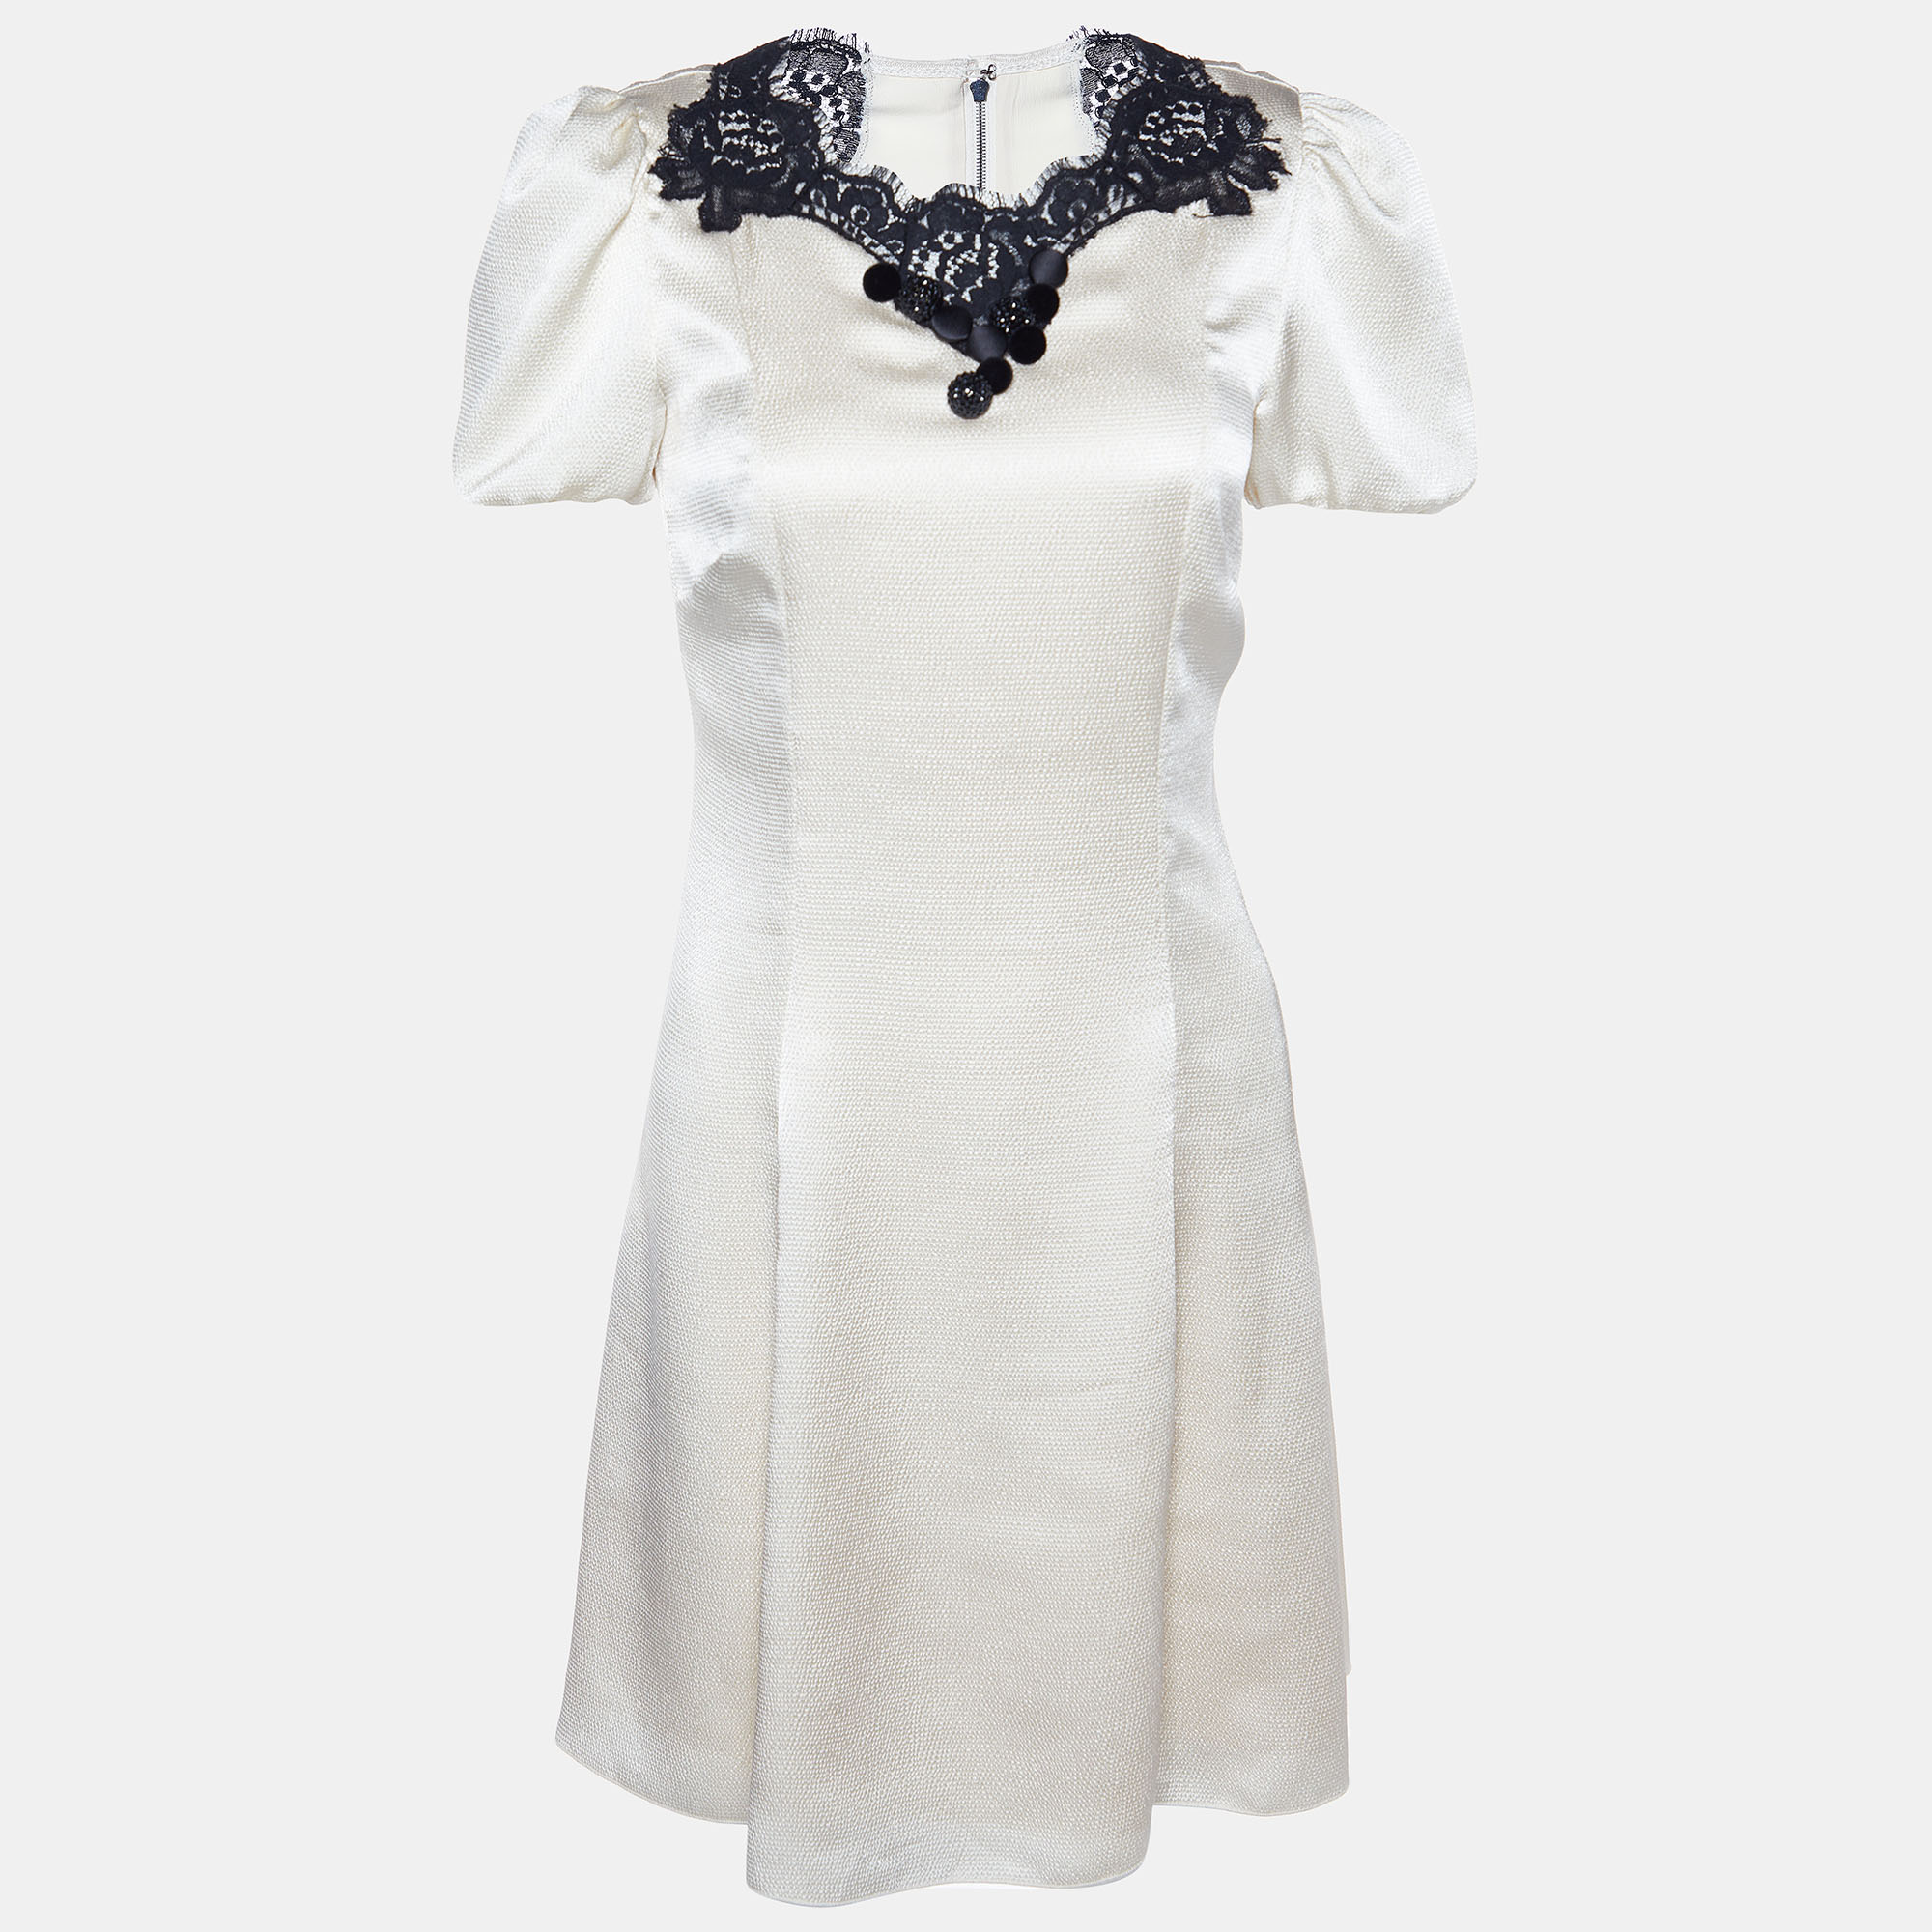 Dolce & gabbana cream textured satin contrast detail min dress s